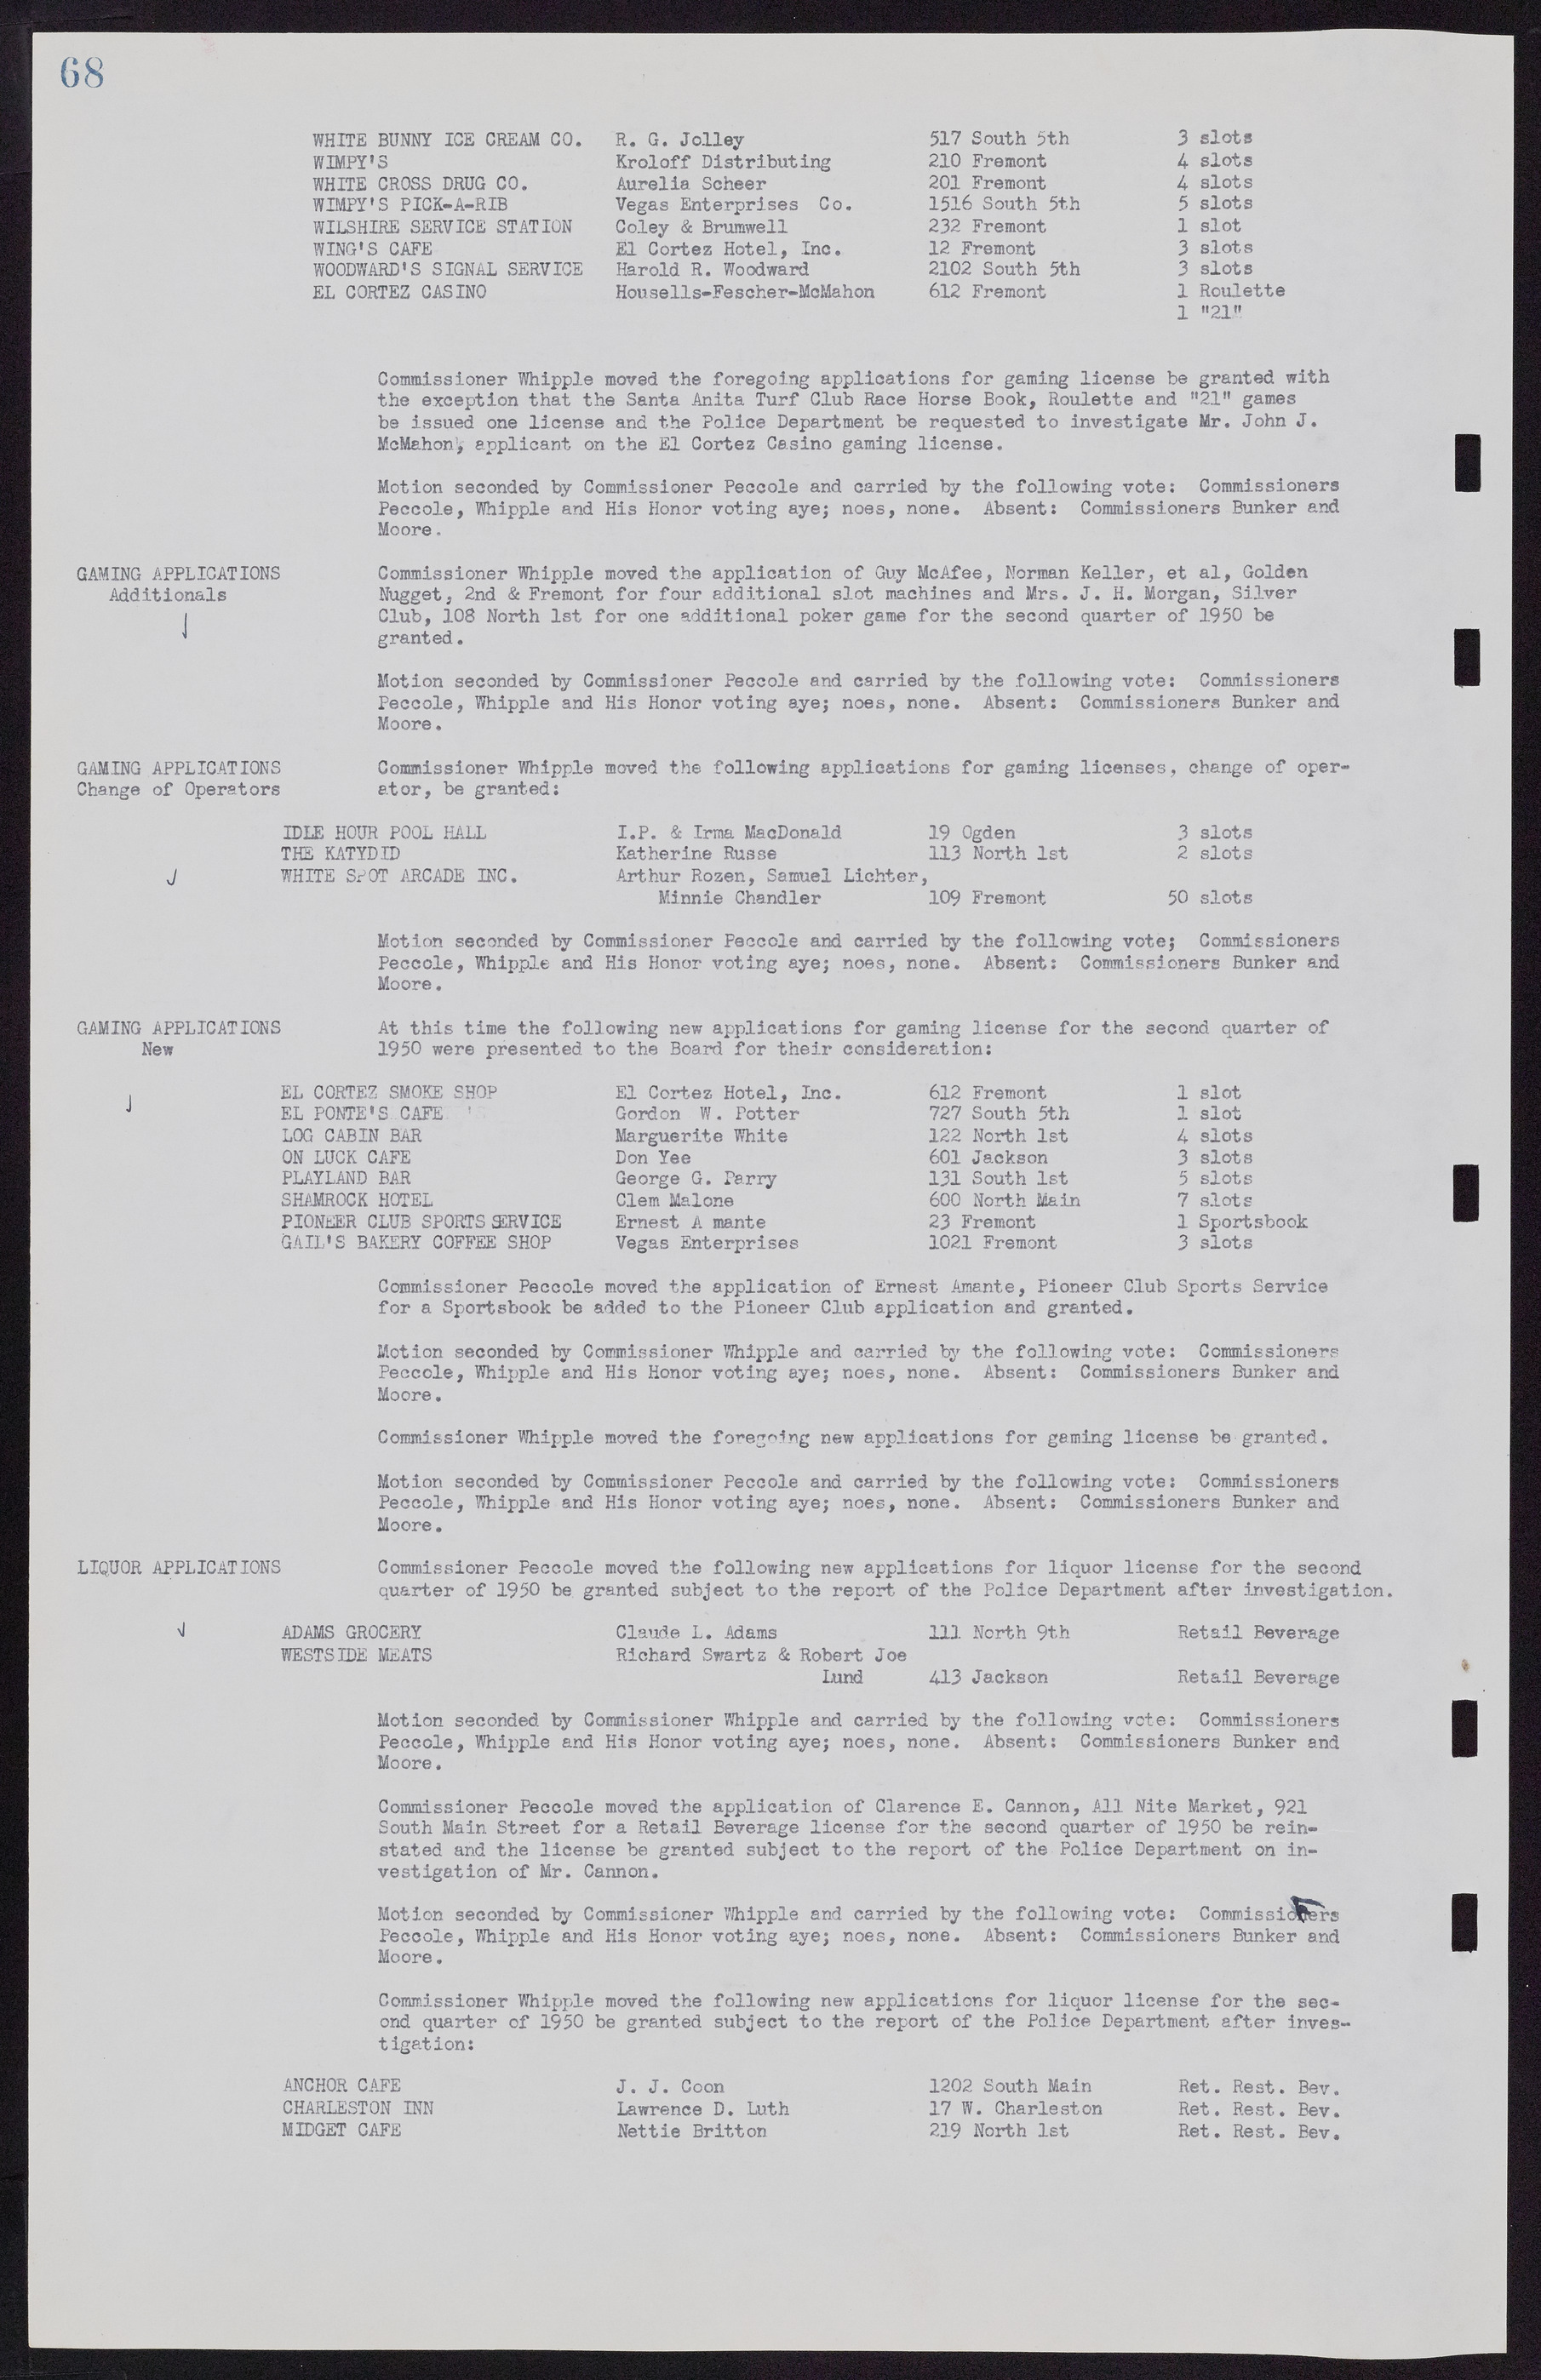 Las Vegas City Commission Minutes, November 7, 1949 to May 21, 1952, lvc000007-76